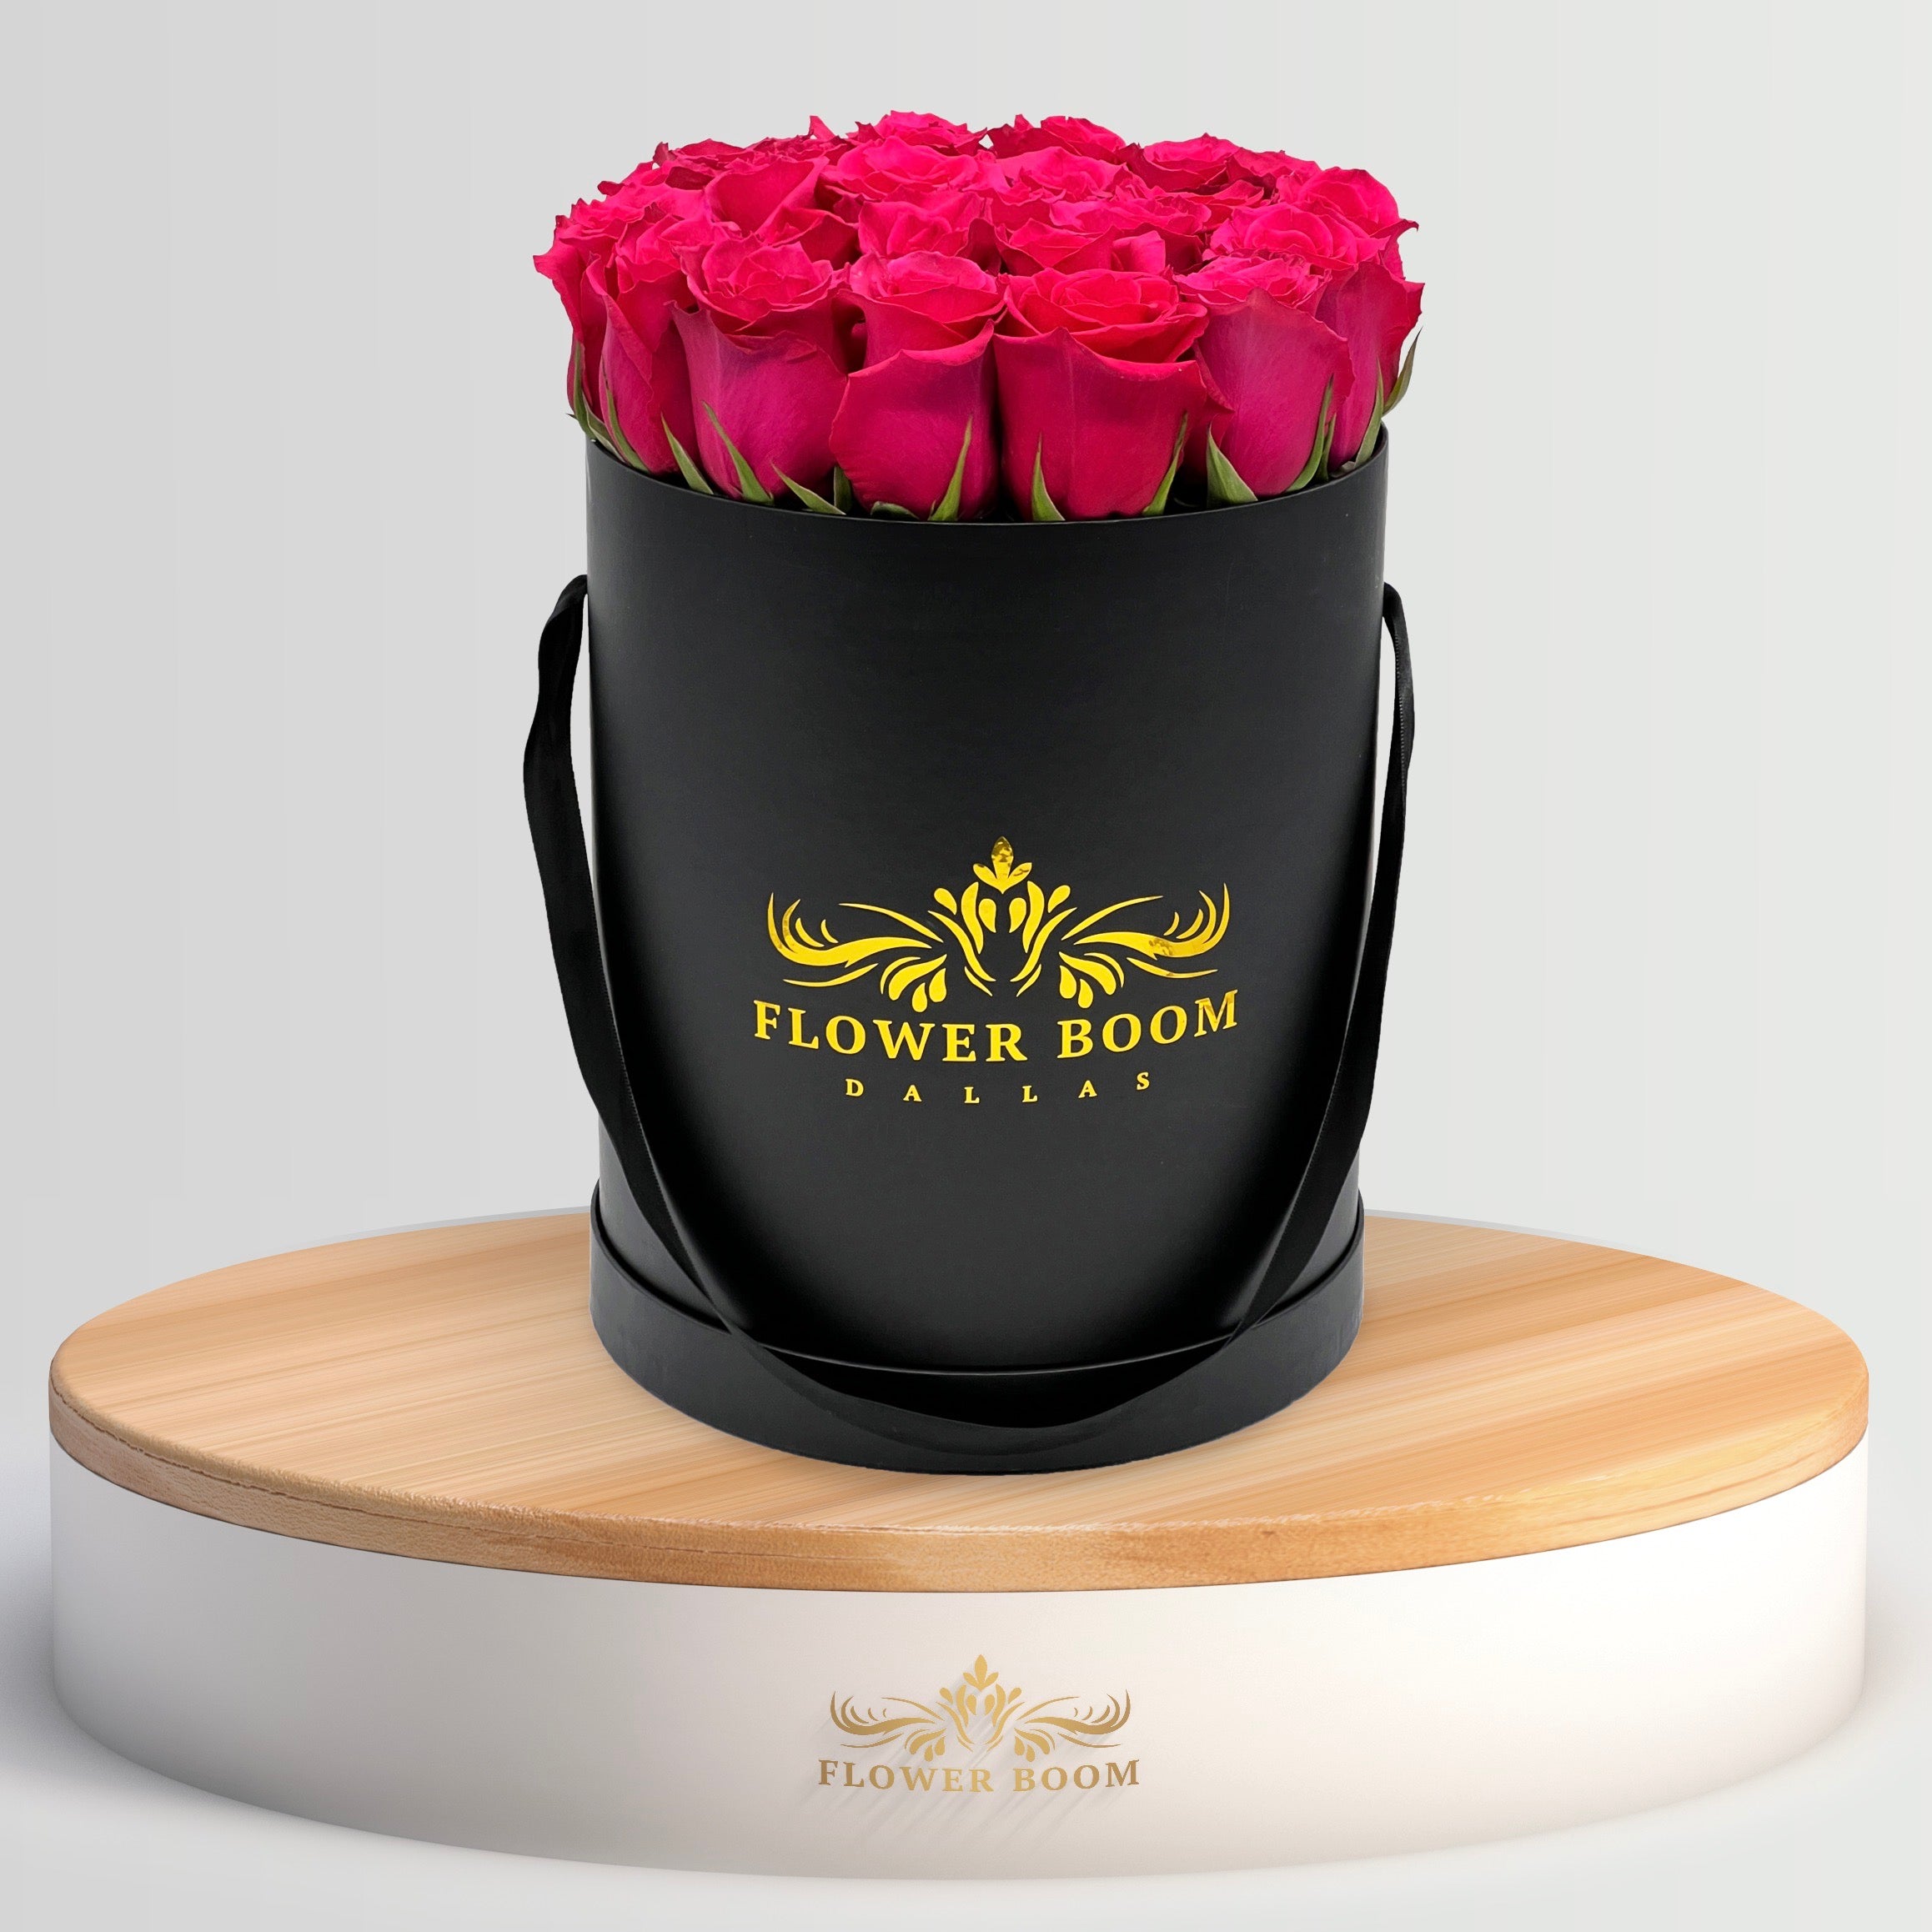 2 dozen Fuchsia hot pink roses in a black box